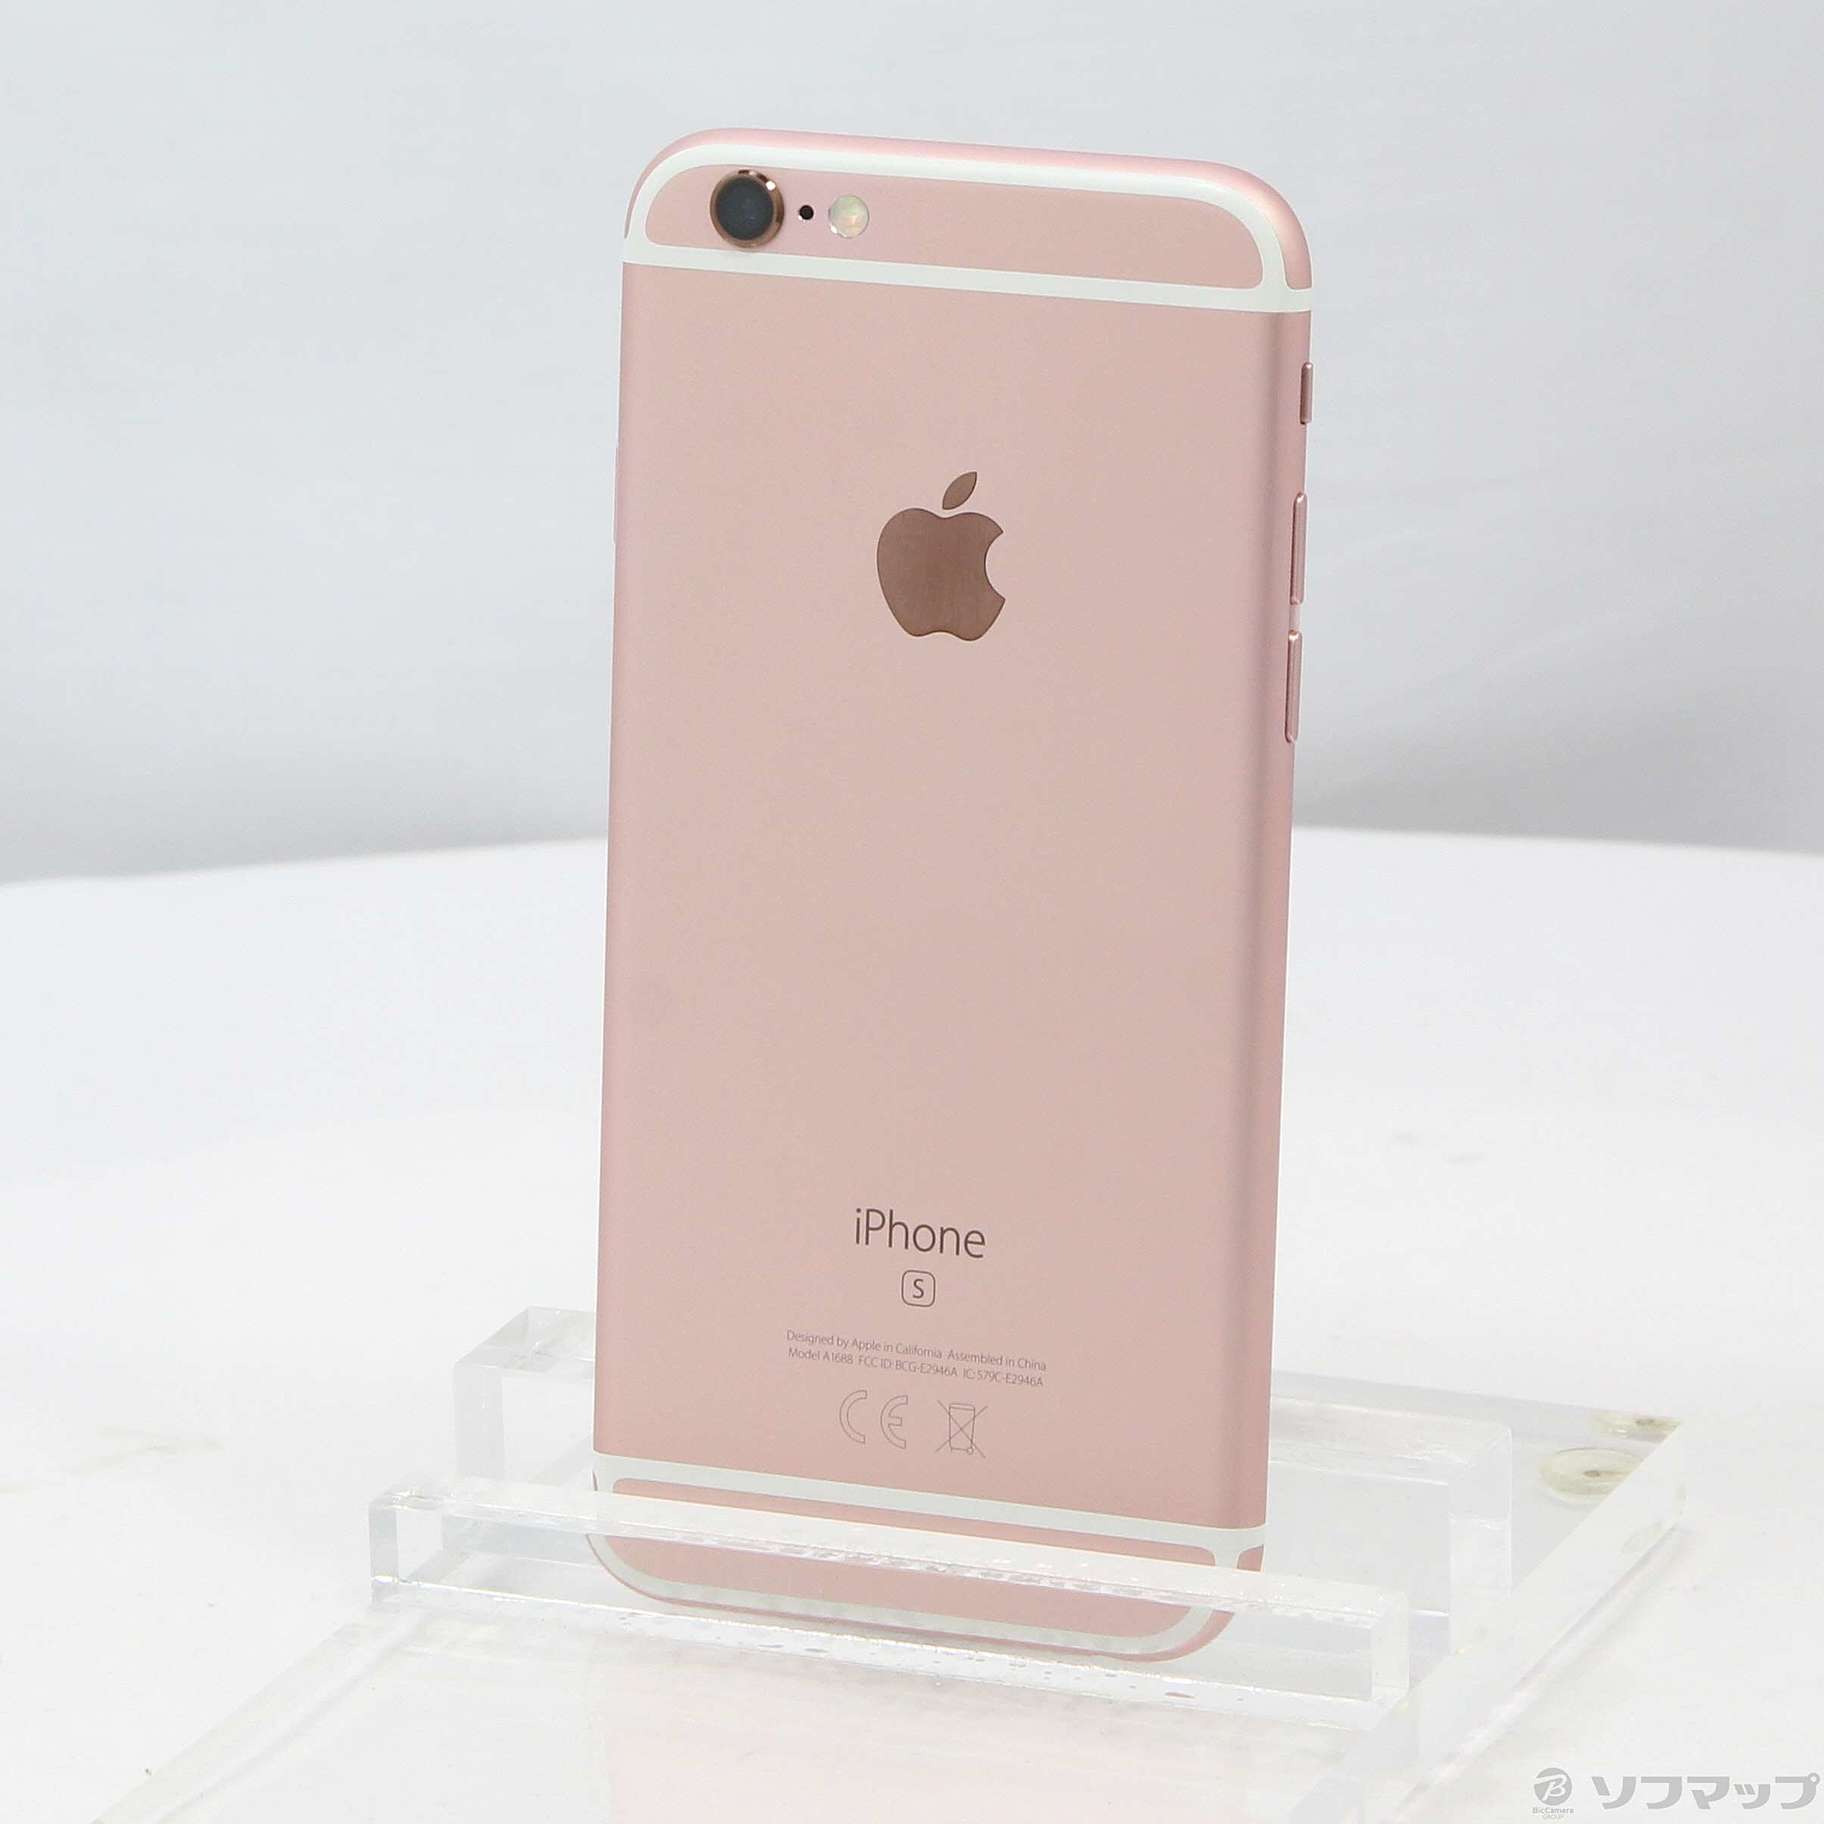 iPhone6sSIMフリー iPhone6s 32GB ゴールド新品 - スマートフォン本体